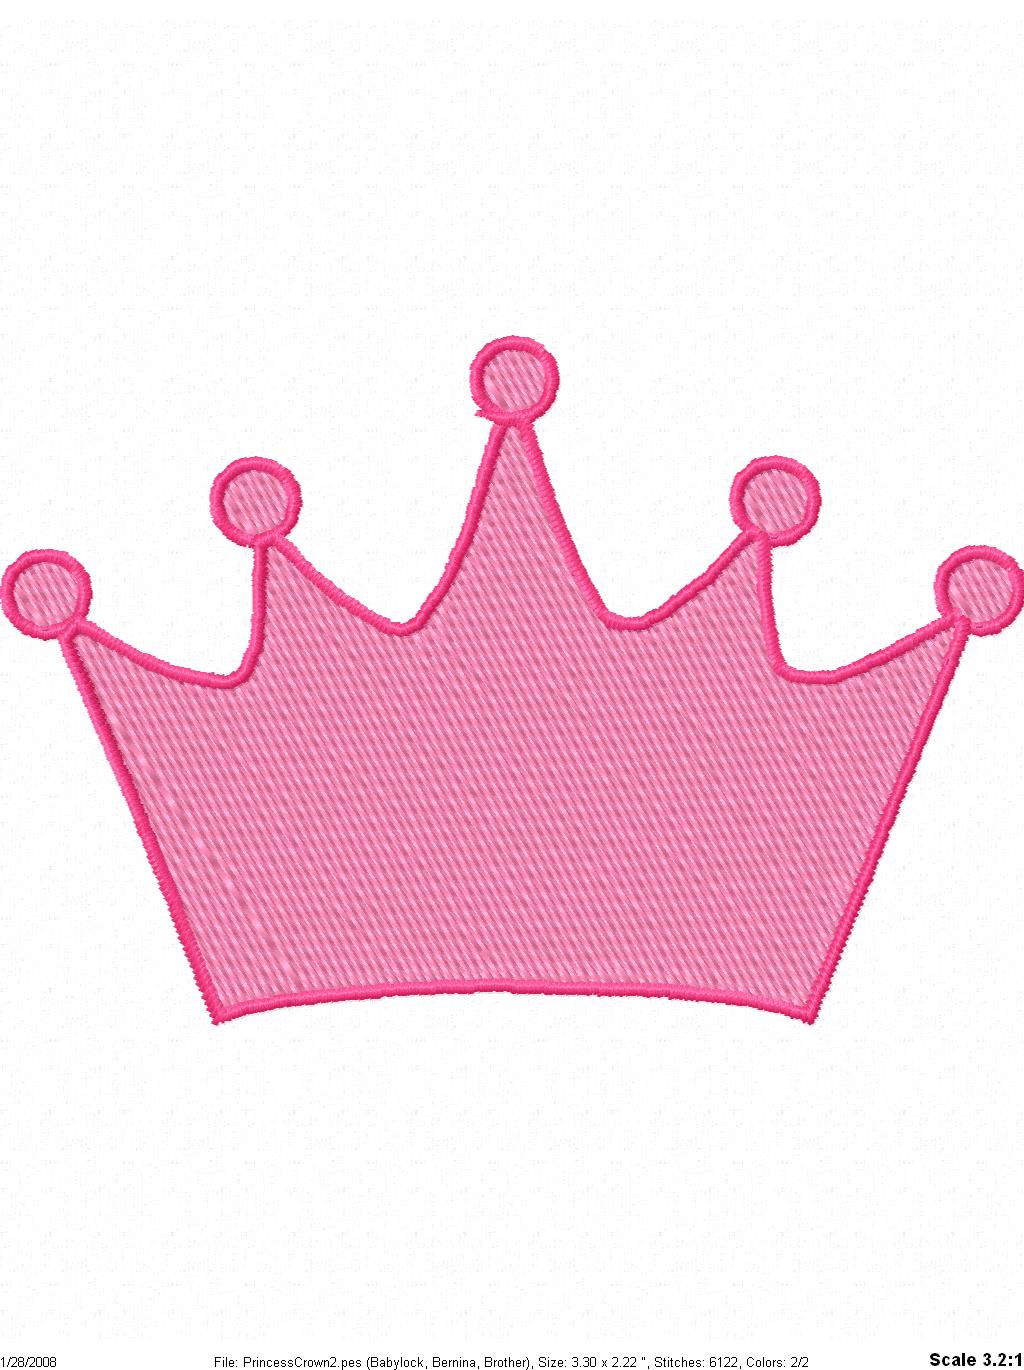 Pink princess crown clipart